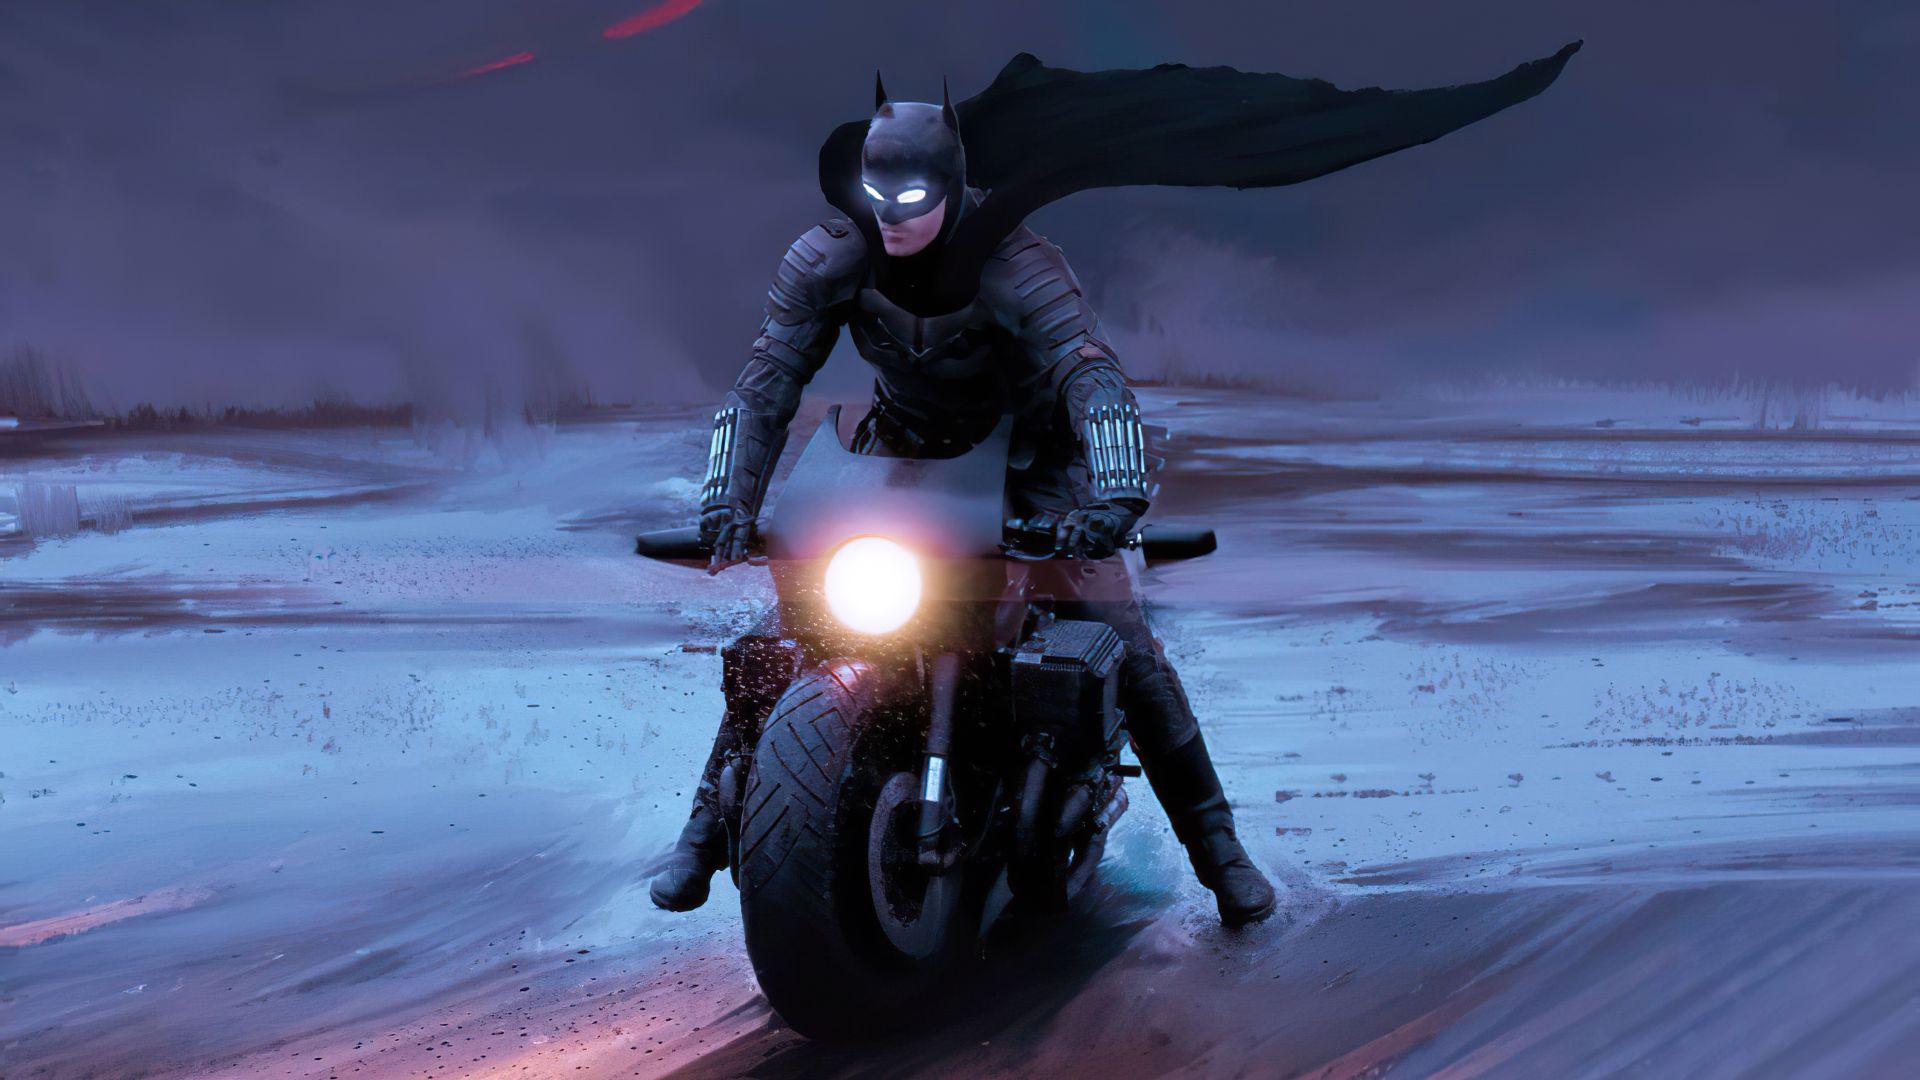 Batman 4K Motorcycle Art Wallpapers